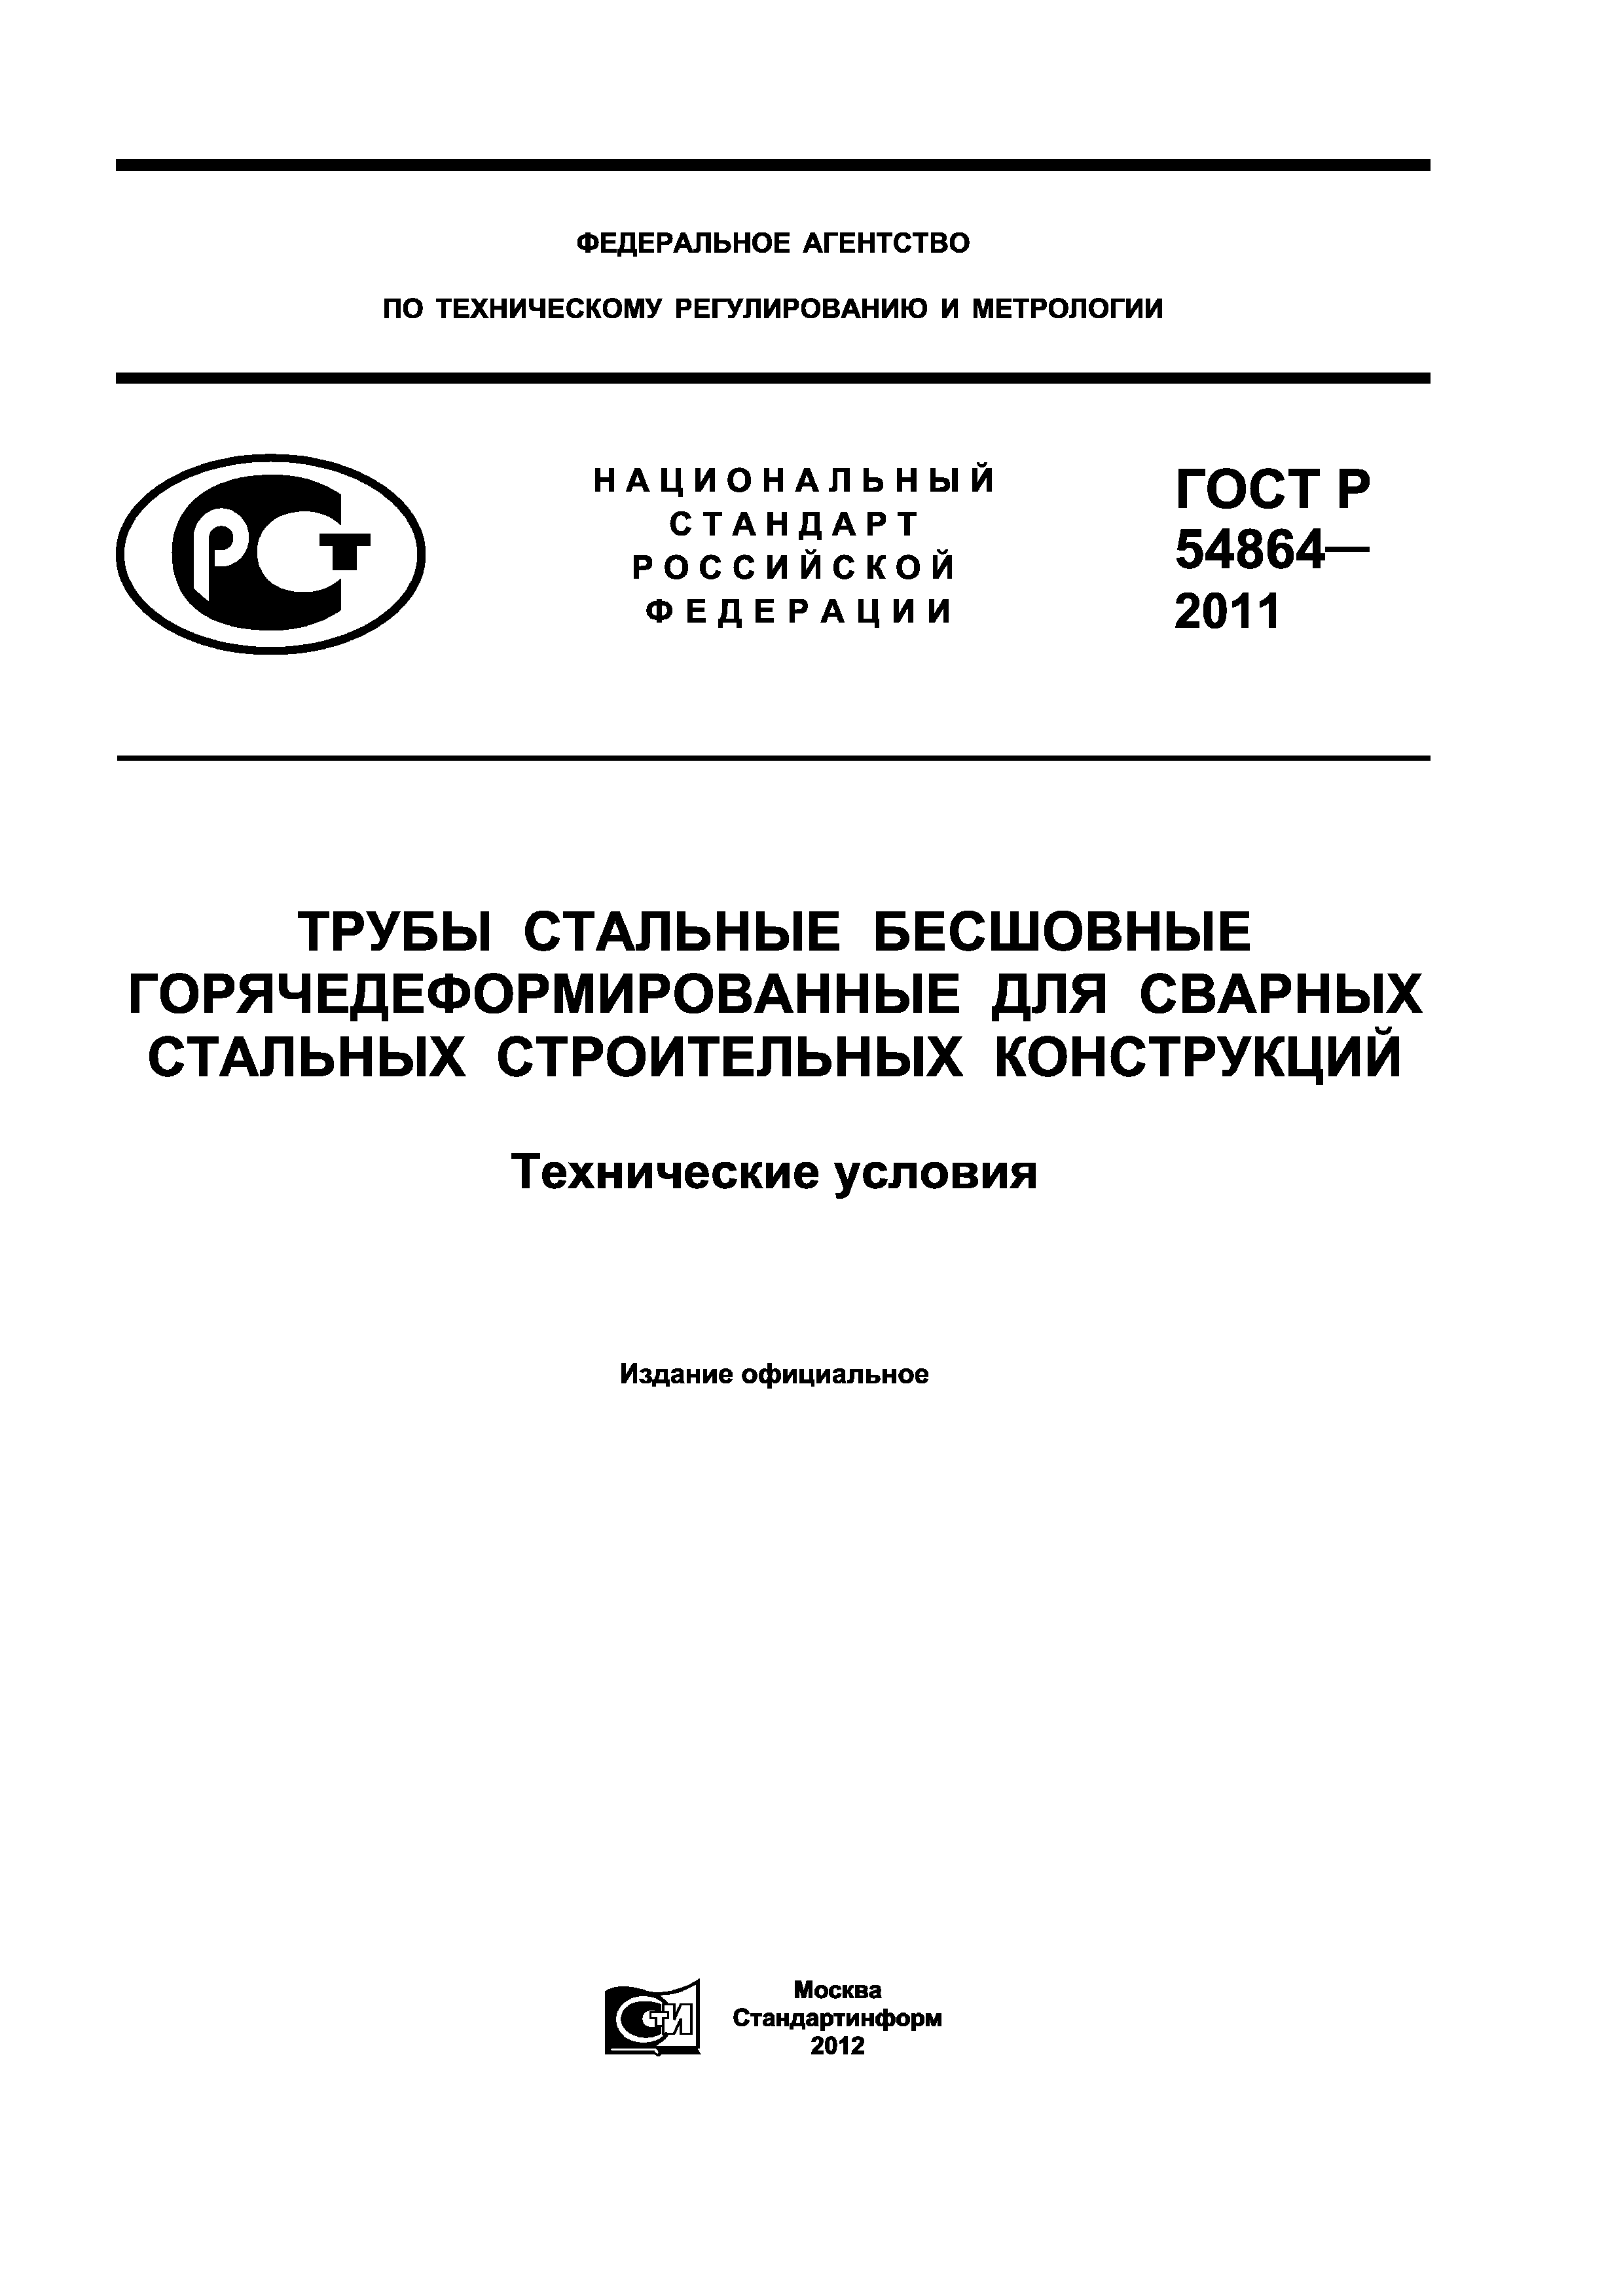 ГОСТ Р 54864-2011